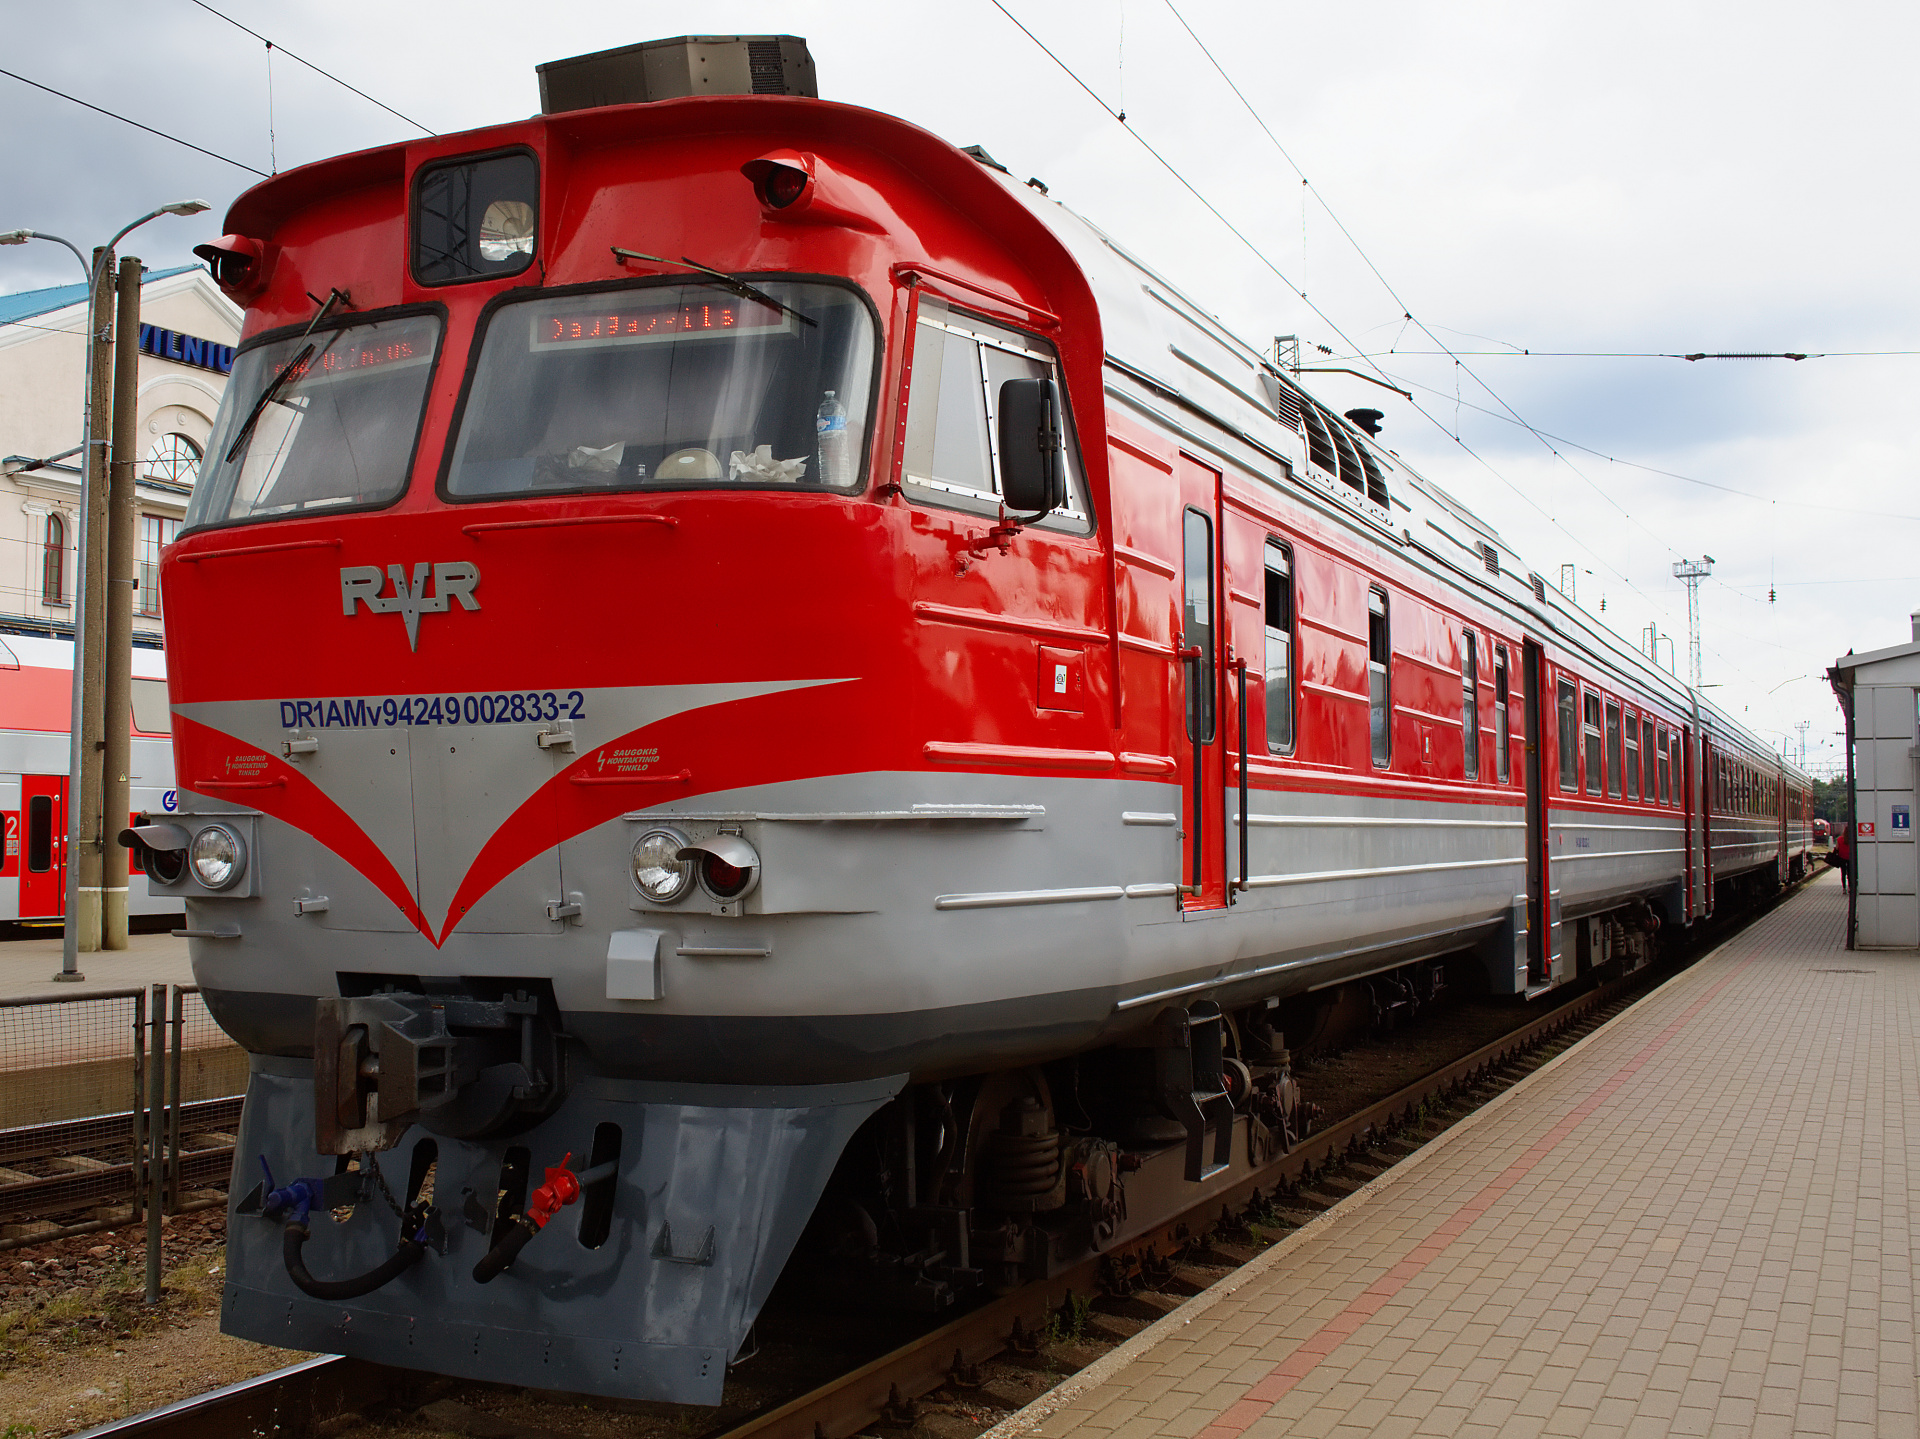 RVR DR1AM 833 (Travels » Vilnius » Vehicles » Trains and Locomotives)